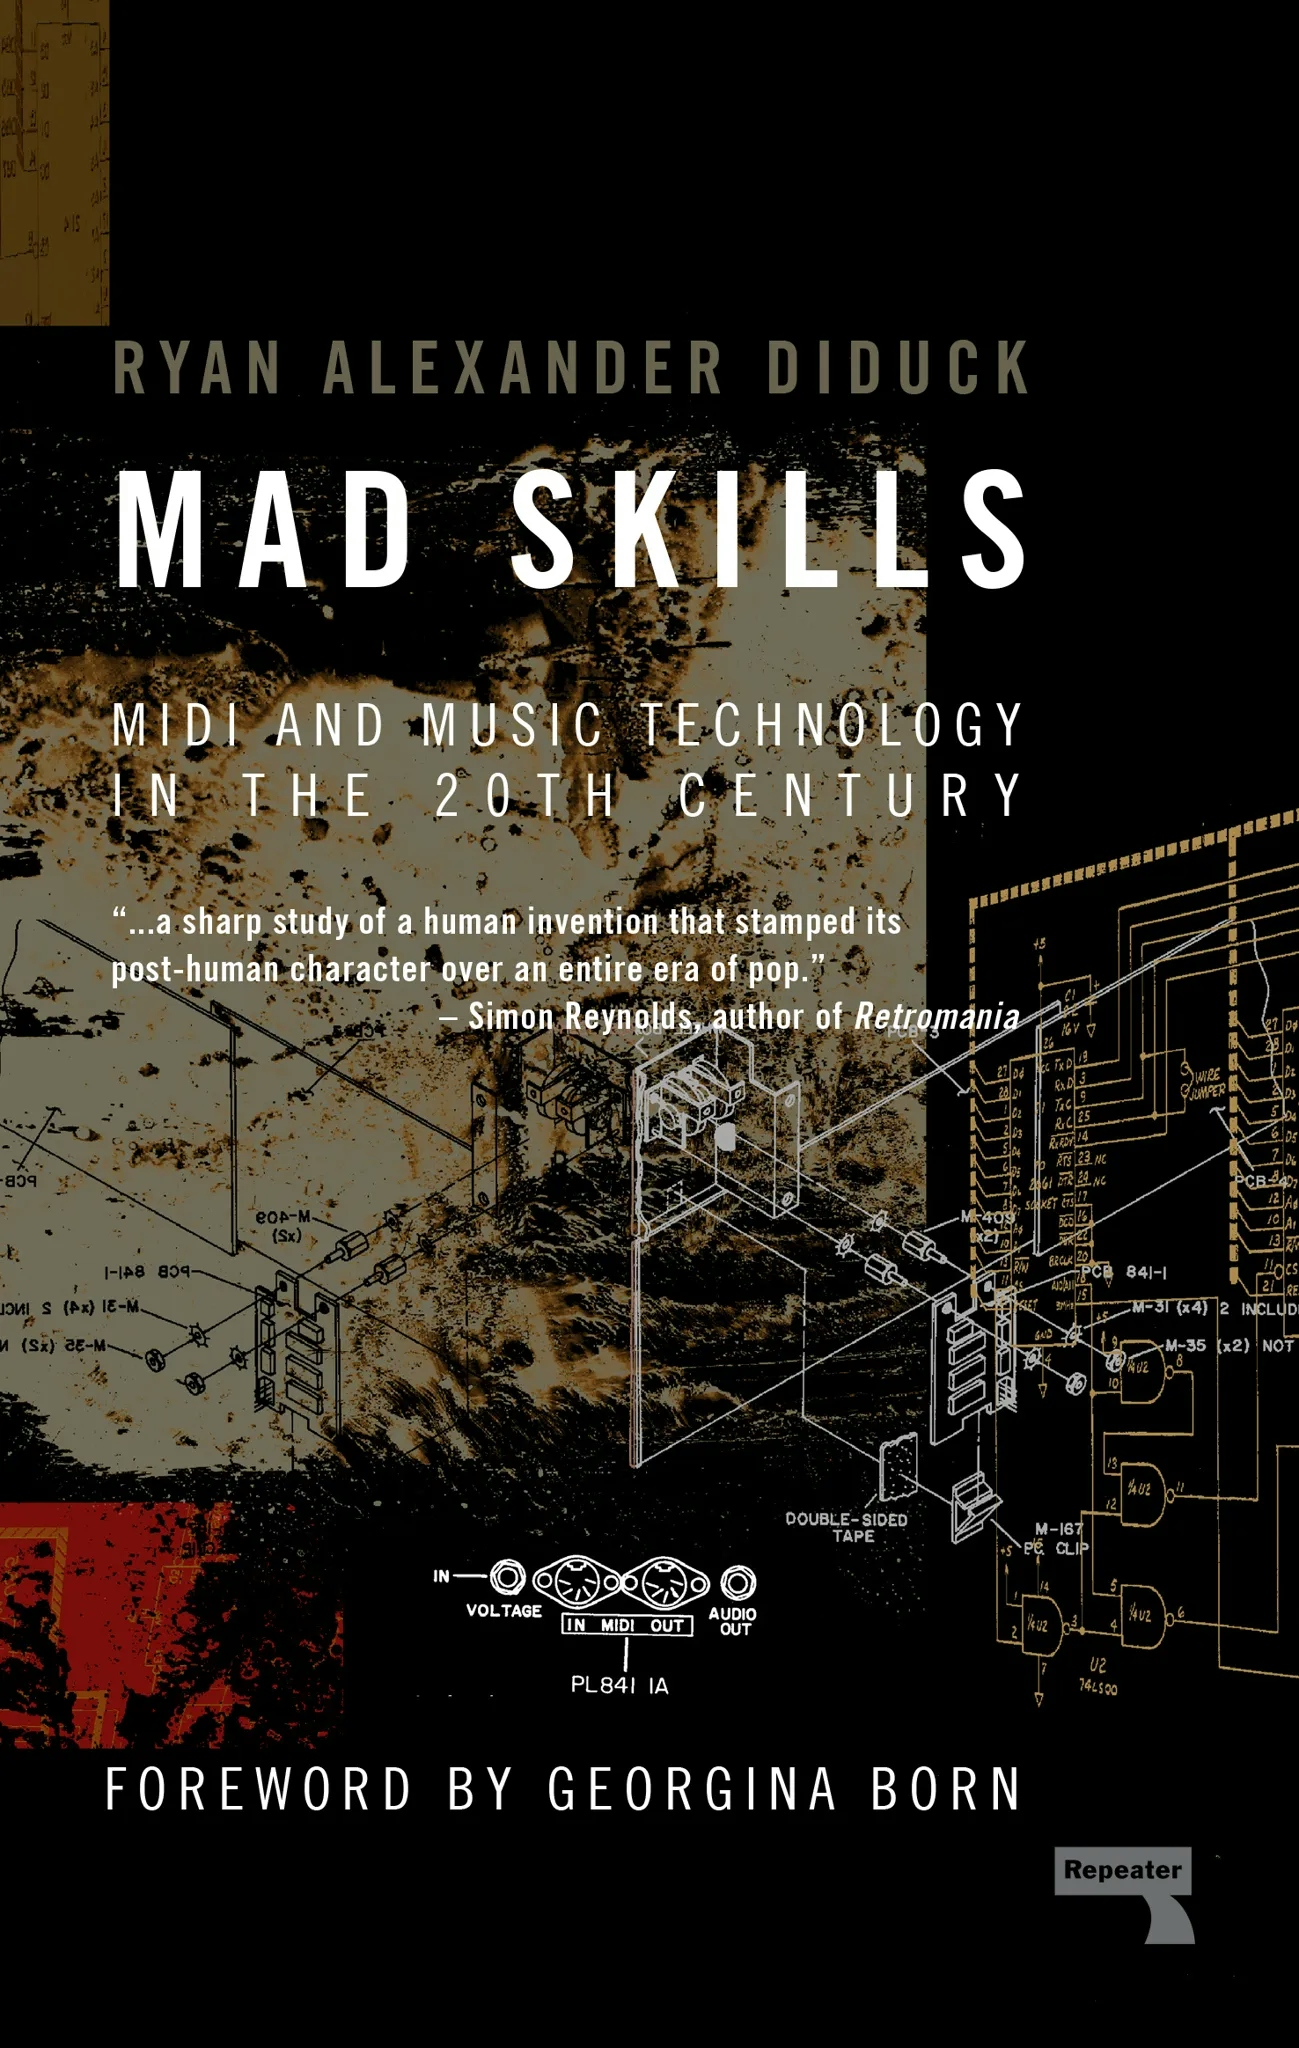 Album artwork for Album artwork for Mad Skills: MIDI and Music Technology in the Twentieth Century by Ryan Diduck by Mad Skills: MIDI and Music Technology in the Twentieth Century - Ryan Diduck